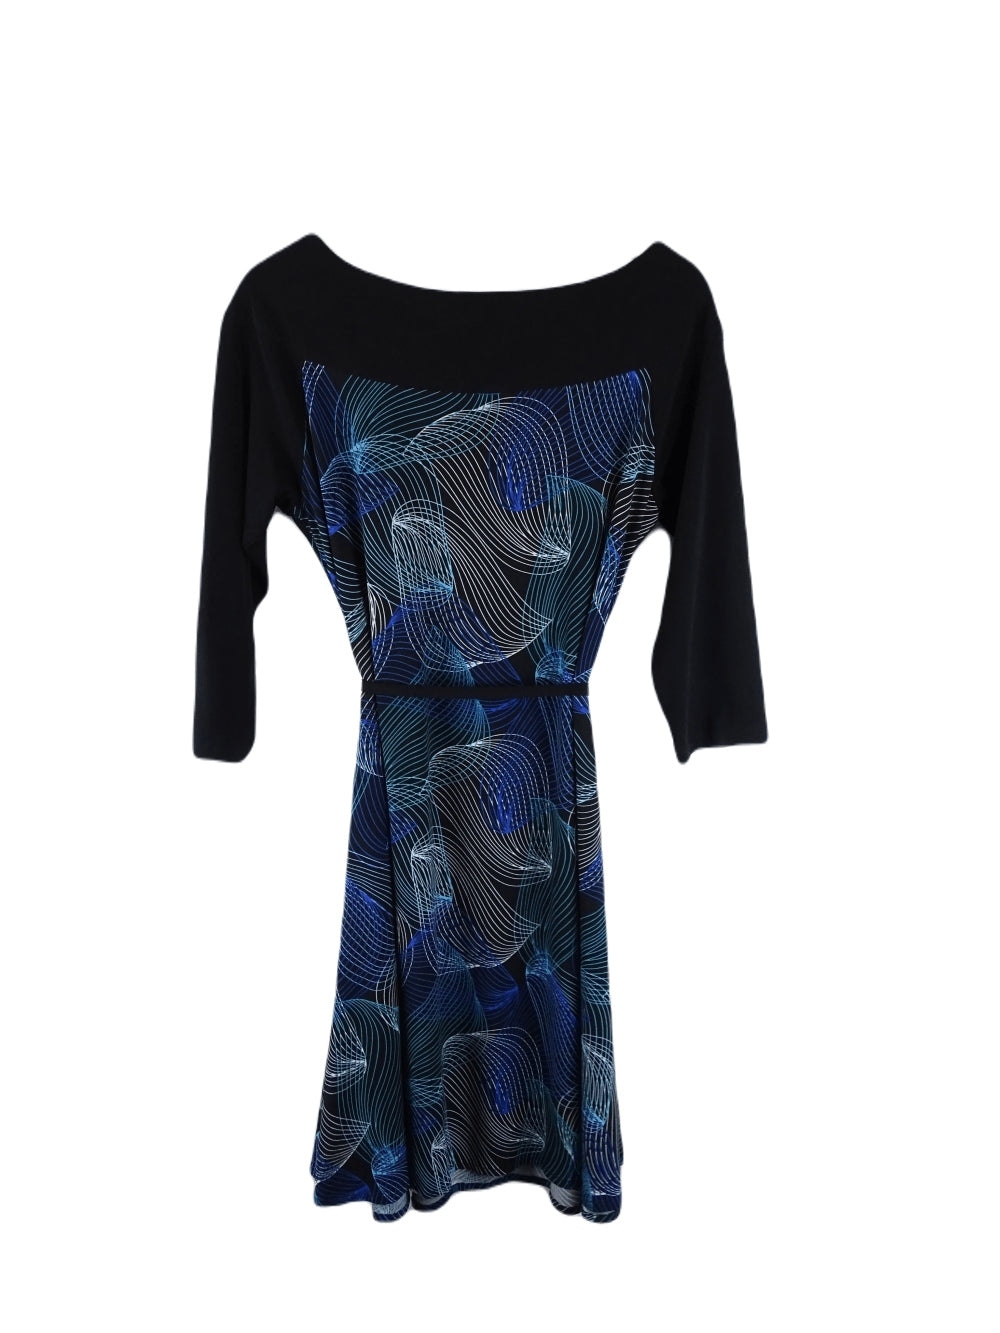 Sacha Drake Black And Blue Patterned Dress 16